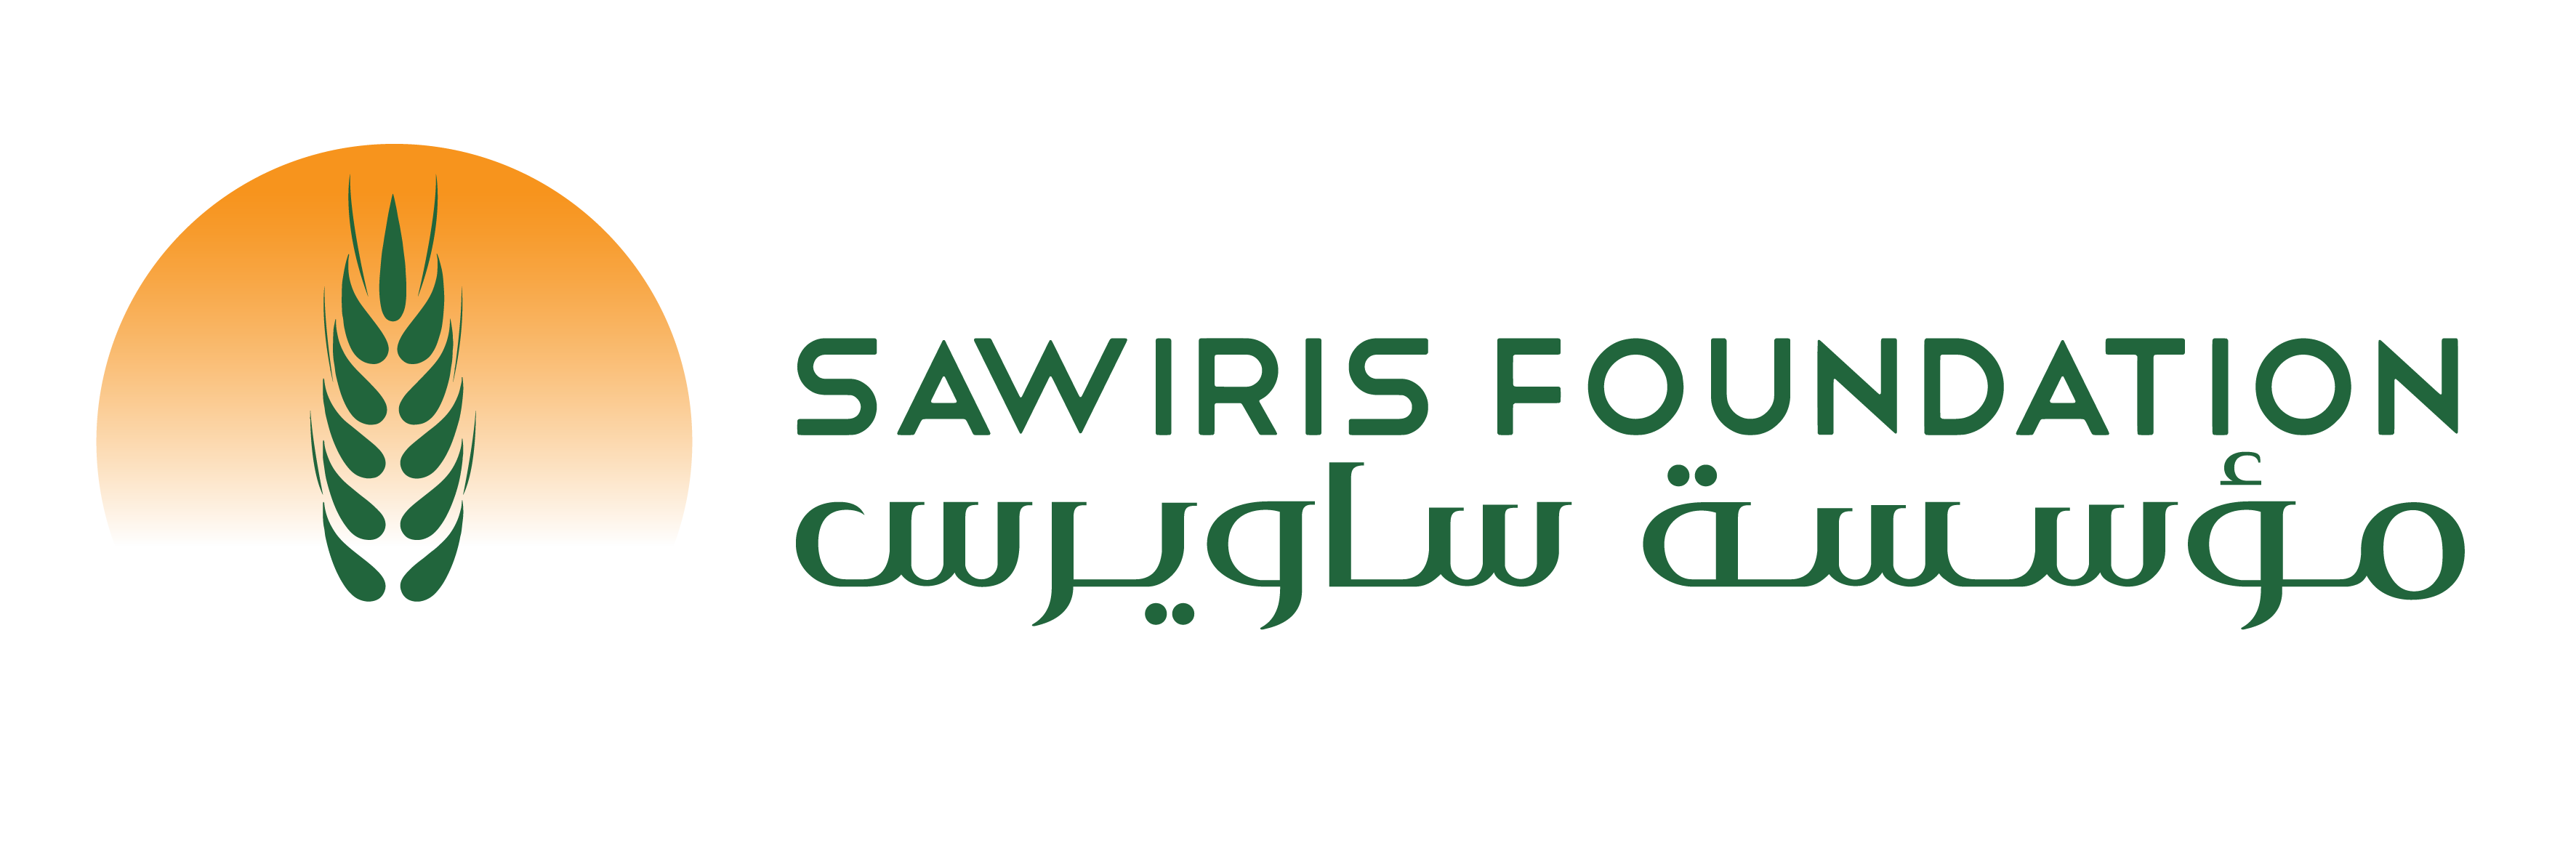 Sawiris Foundation Logo